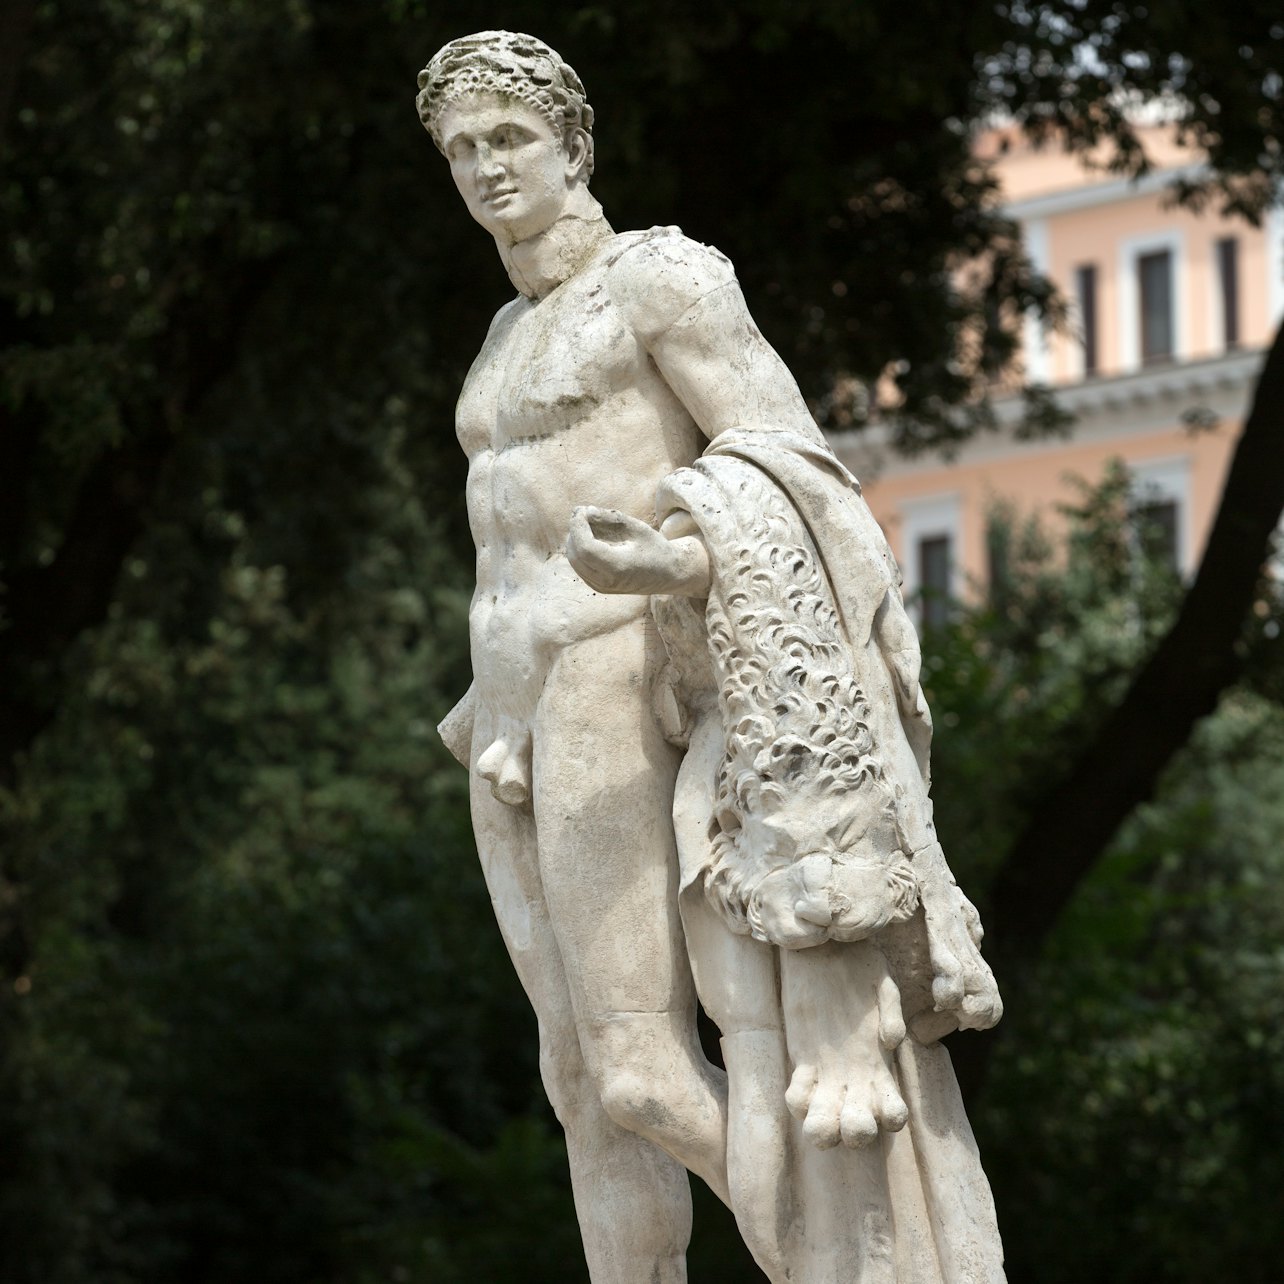 Galería Borghese: Entrada reservada - Alojamientos en Roma